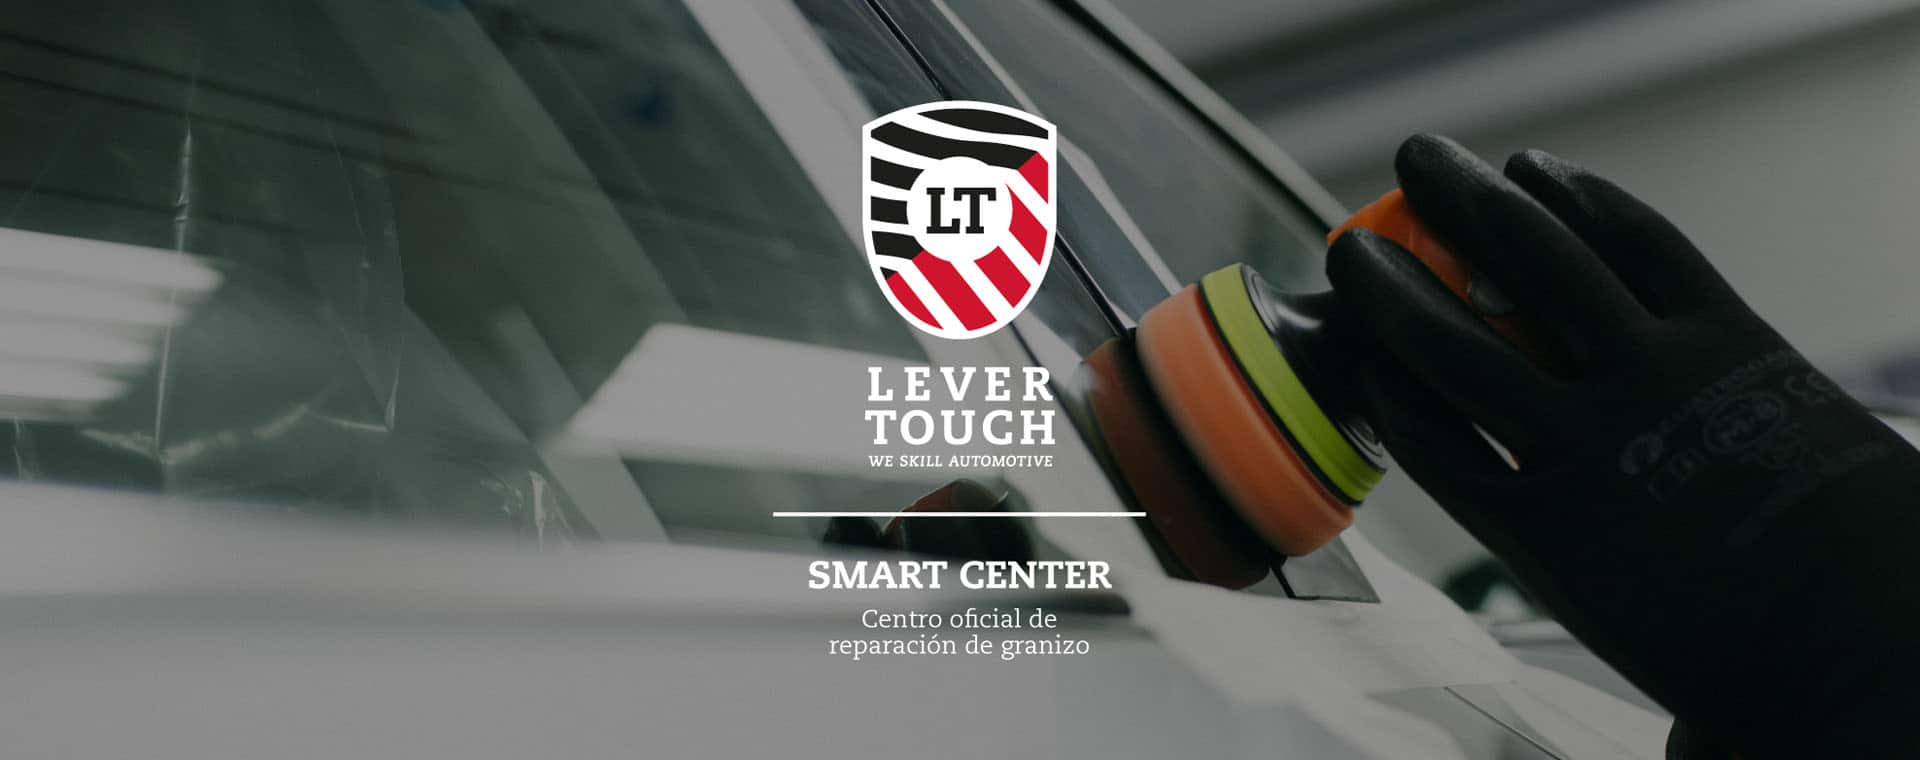 Levertouch Smart Center